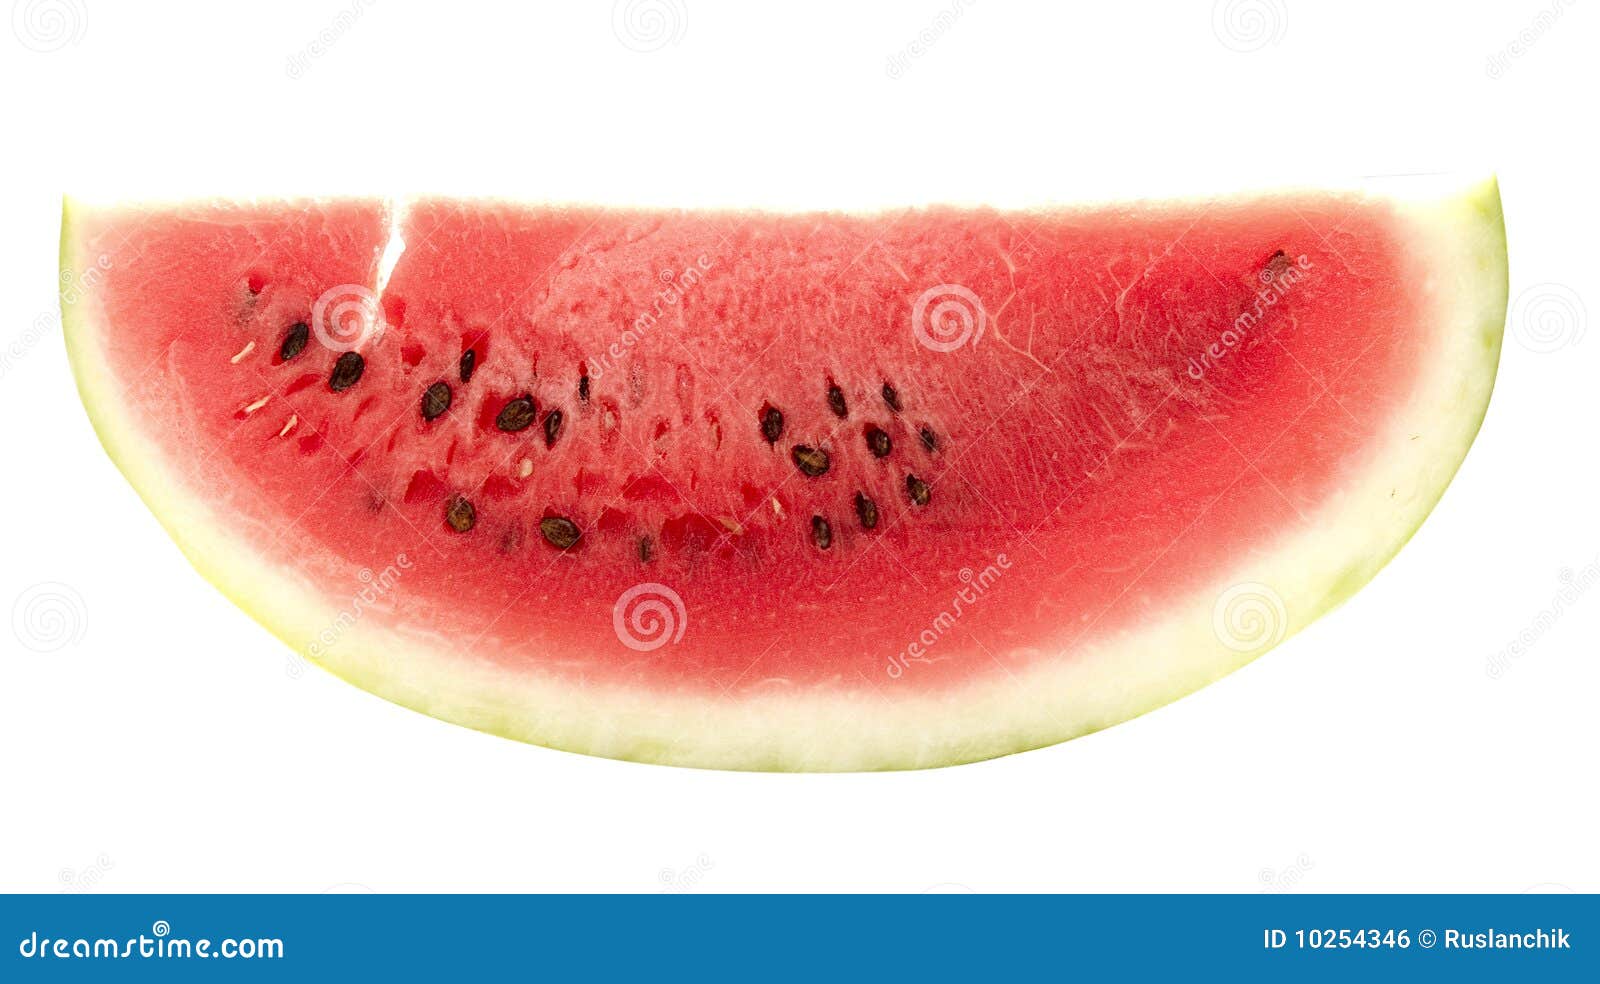 Watermelon slice. Ripe watermelon isolated on white